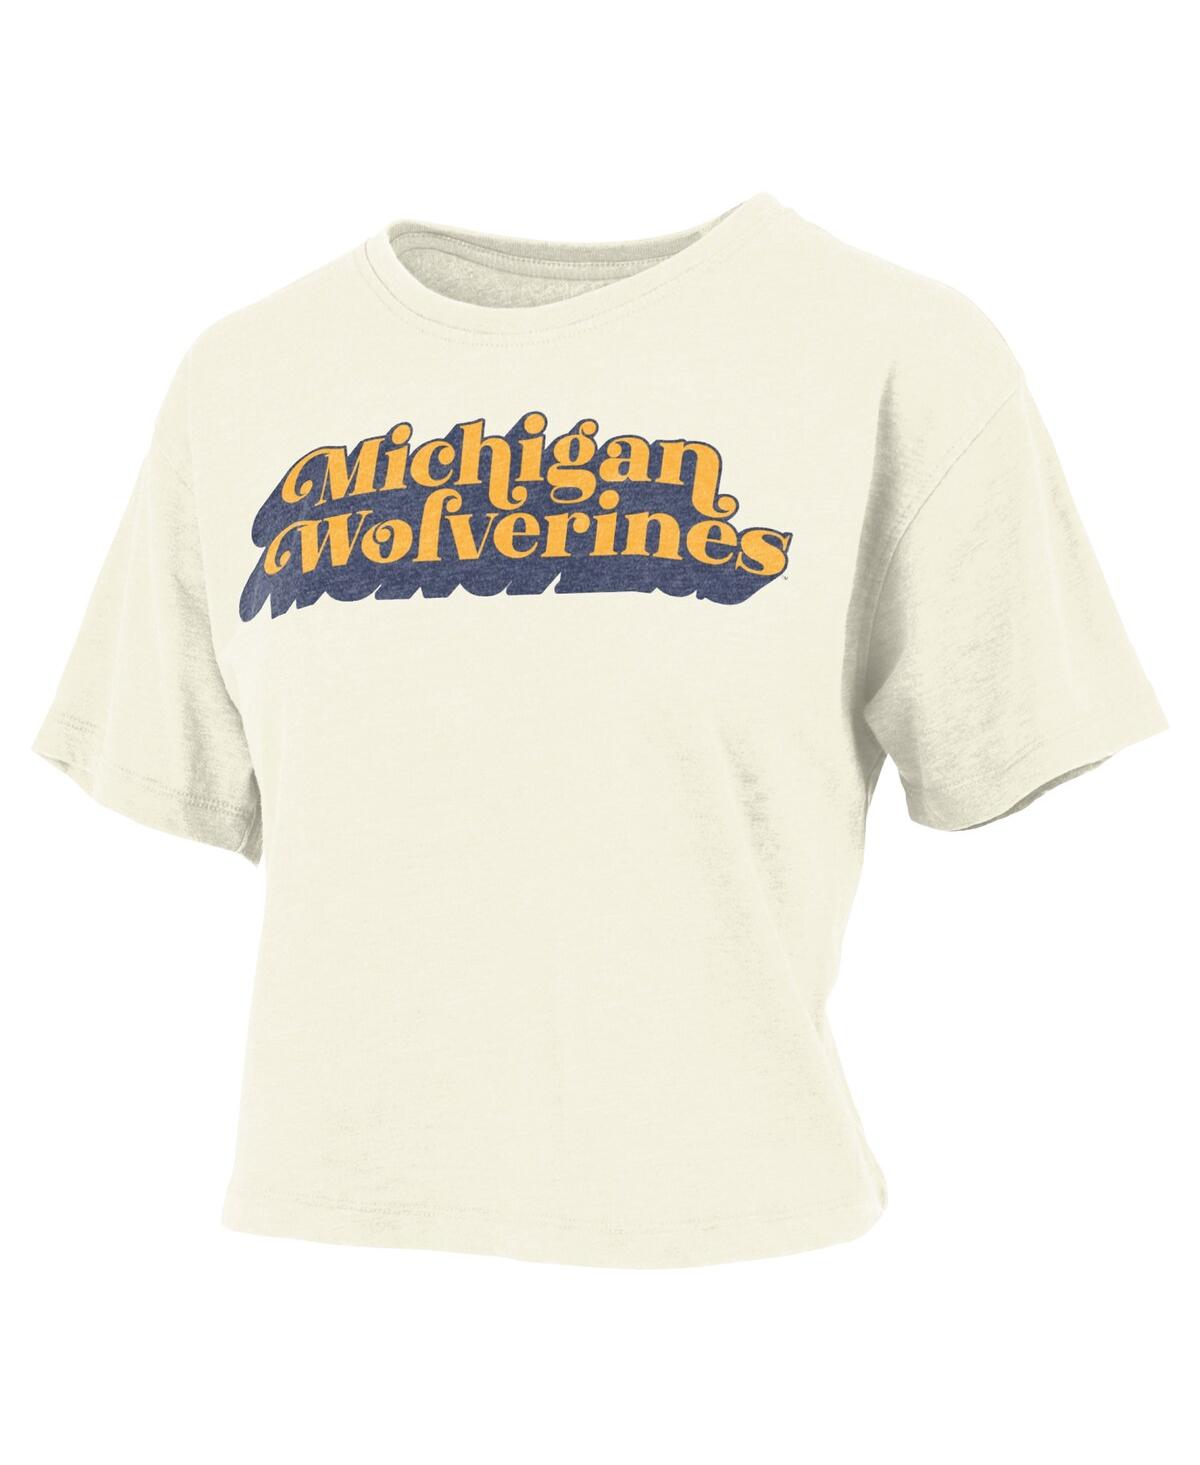 Shop Pressbox Women's  White Michigan Wolverines Vintage-like Easy Team Name Waist-length T-shirt